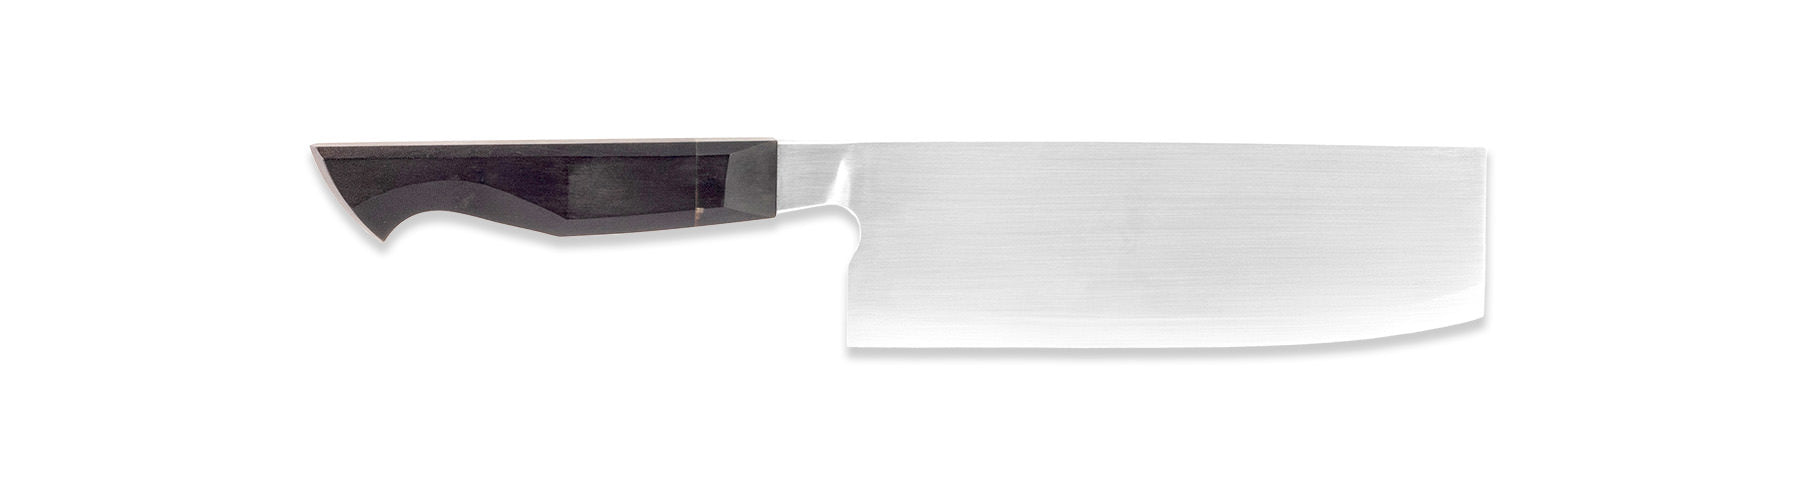 INNOVATIONwhite™ 6 Ceramic Nakiri Knife - White Z212 Blade with Non-Slip  Black Handle